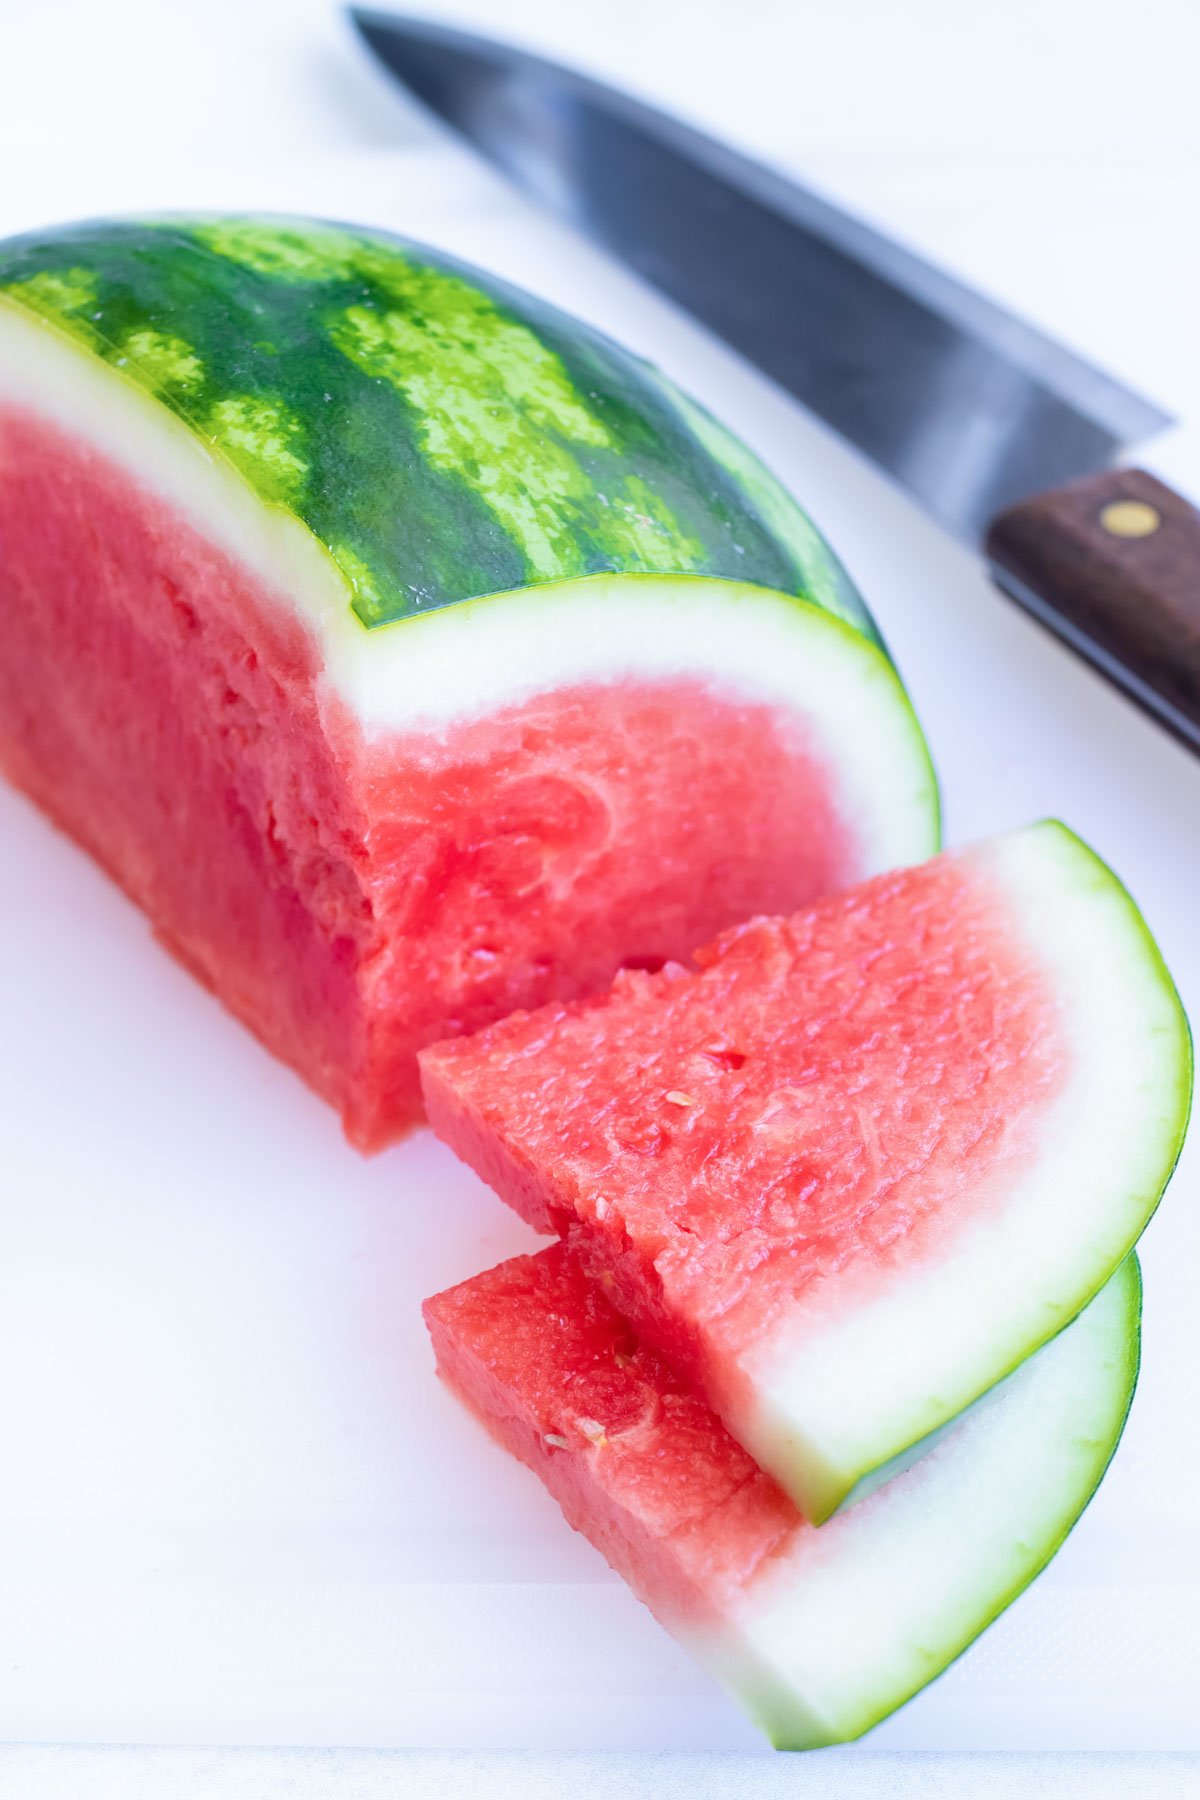 Slices next to quarter of a watermelon